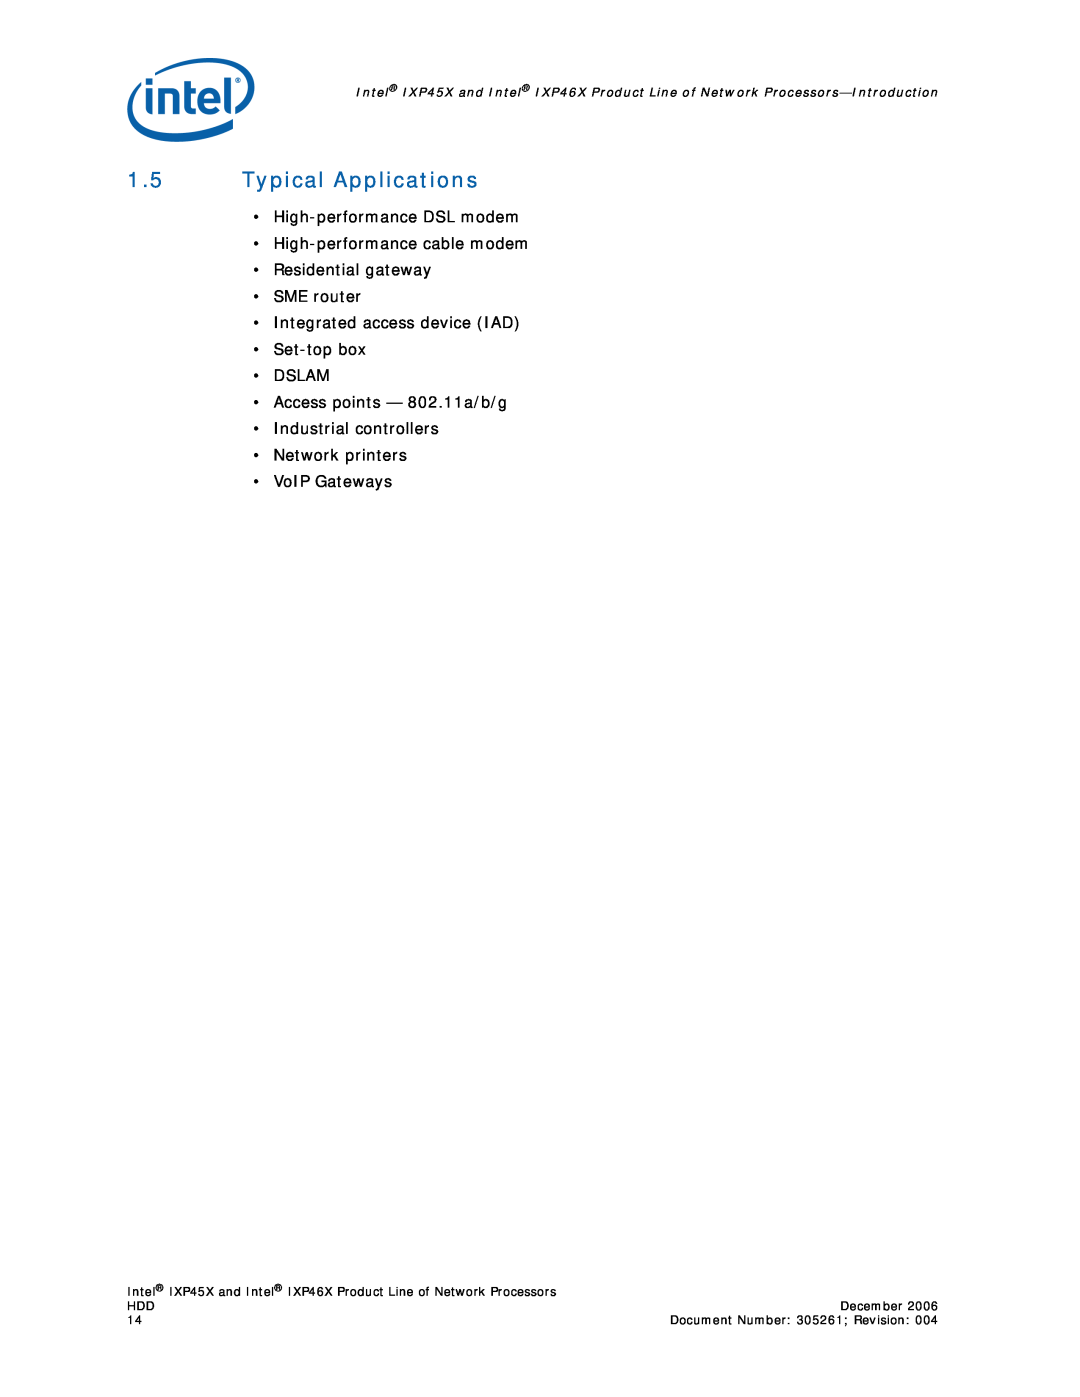 Intel IXP46X, IXP45X manual 1.5Typical Applications 